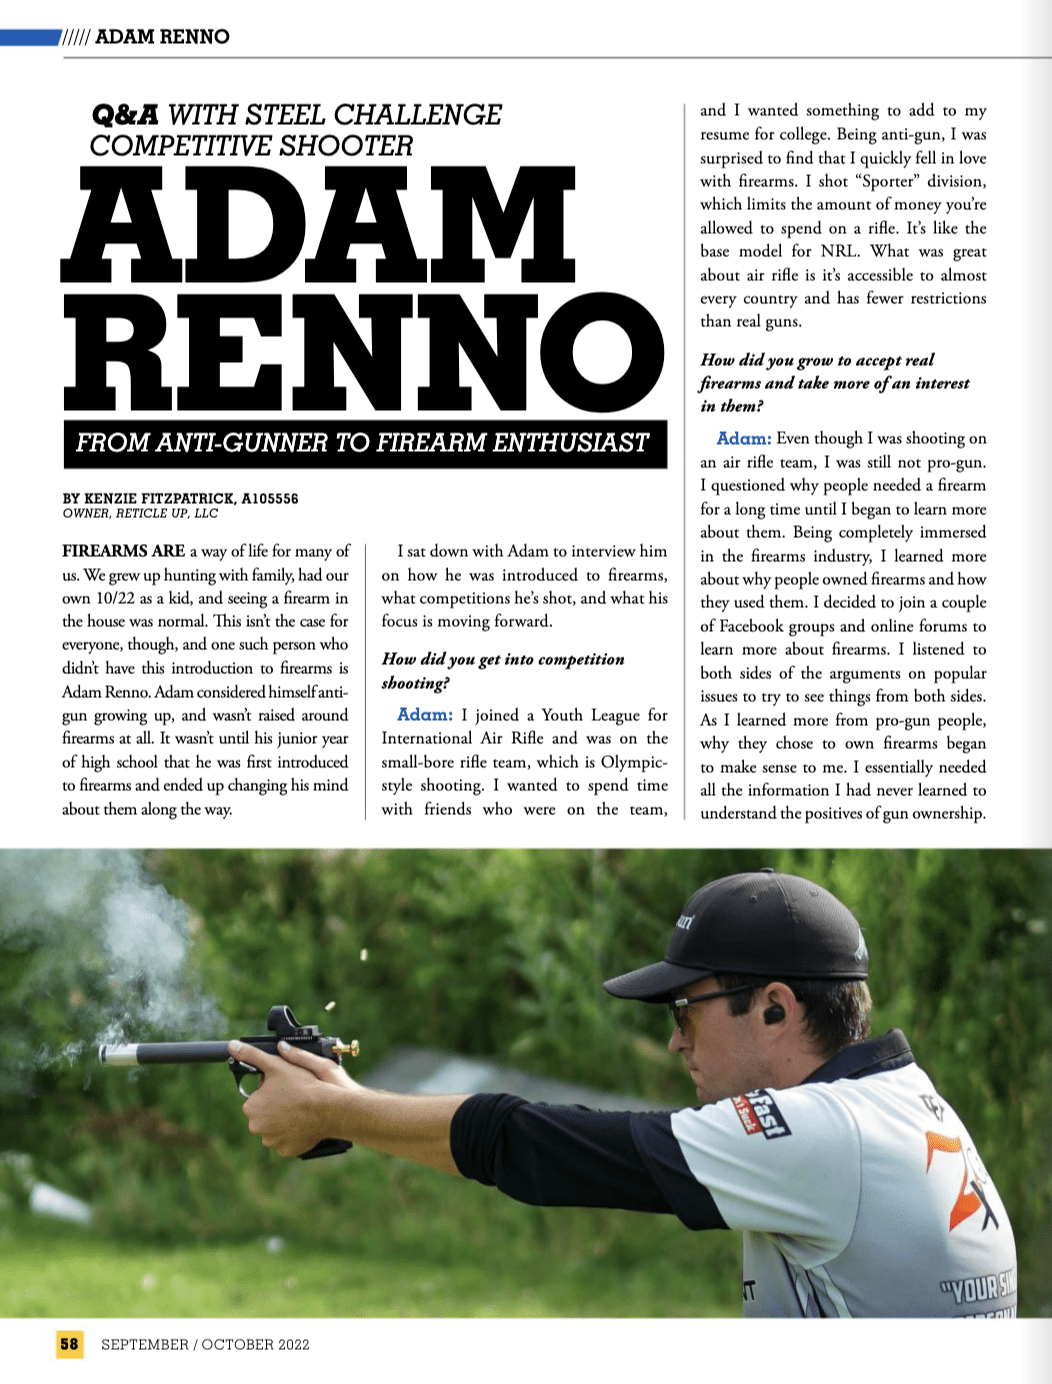 Adam Renno: From Anti-Gunner to Firearm Enthusiast